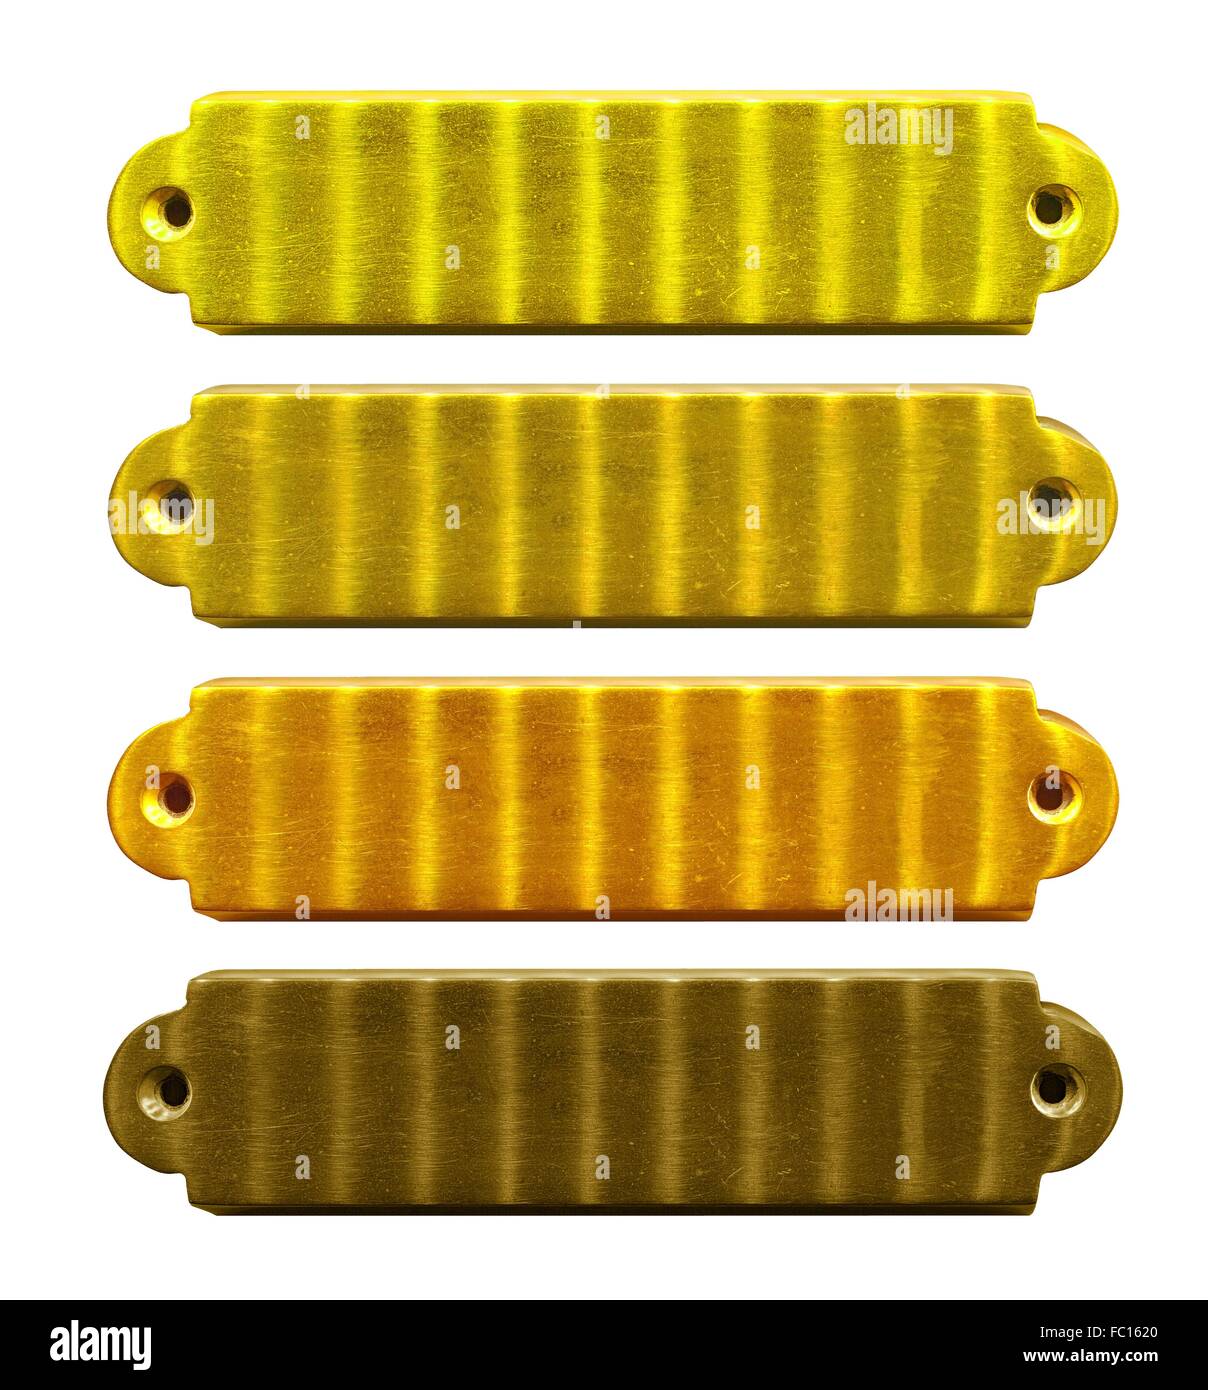 metallic door plates without labeling Stock Photo